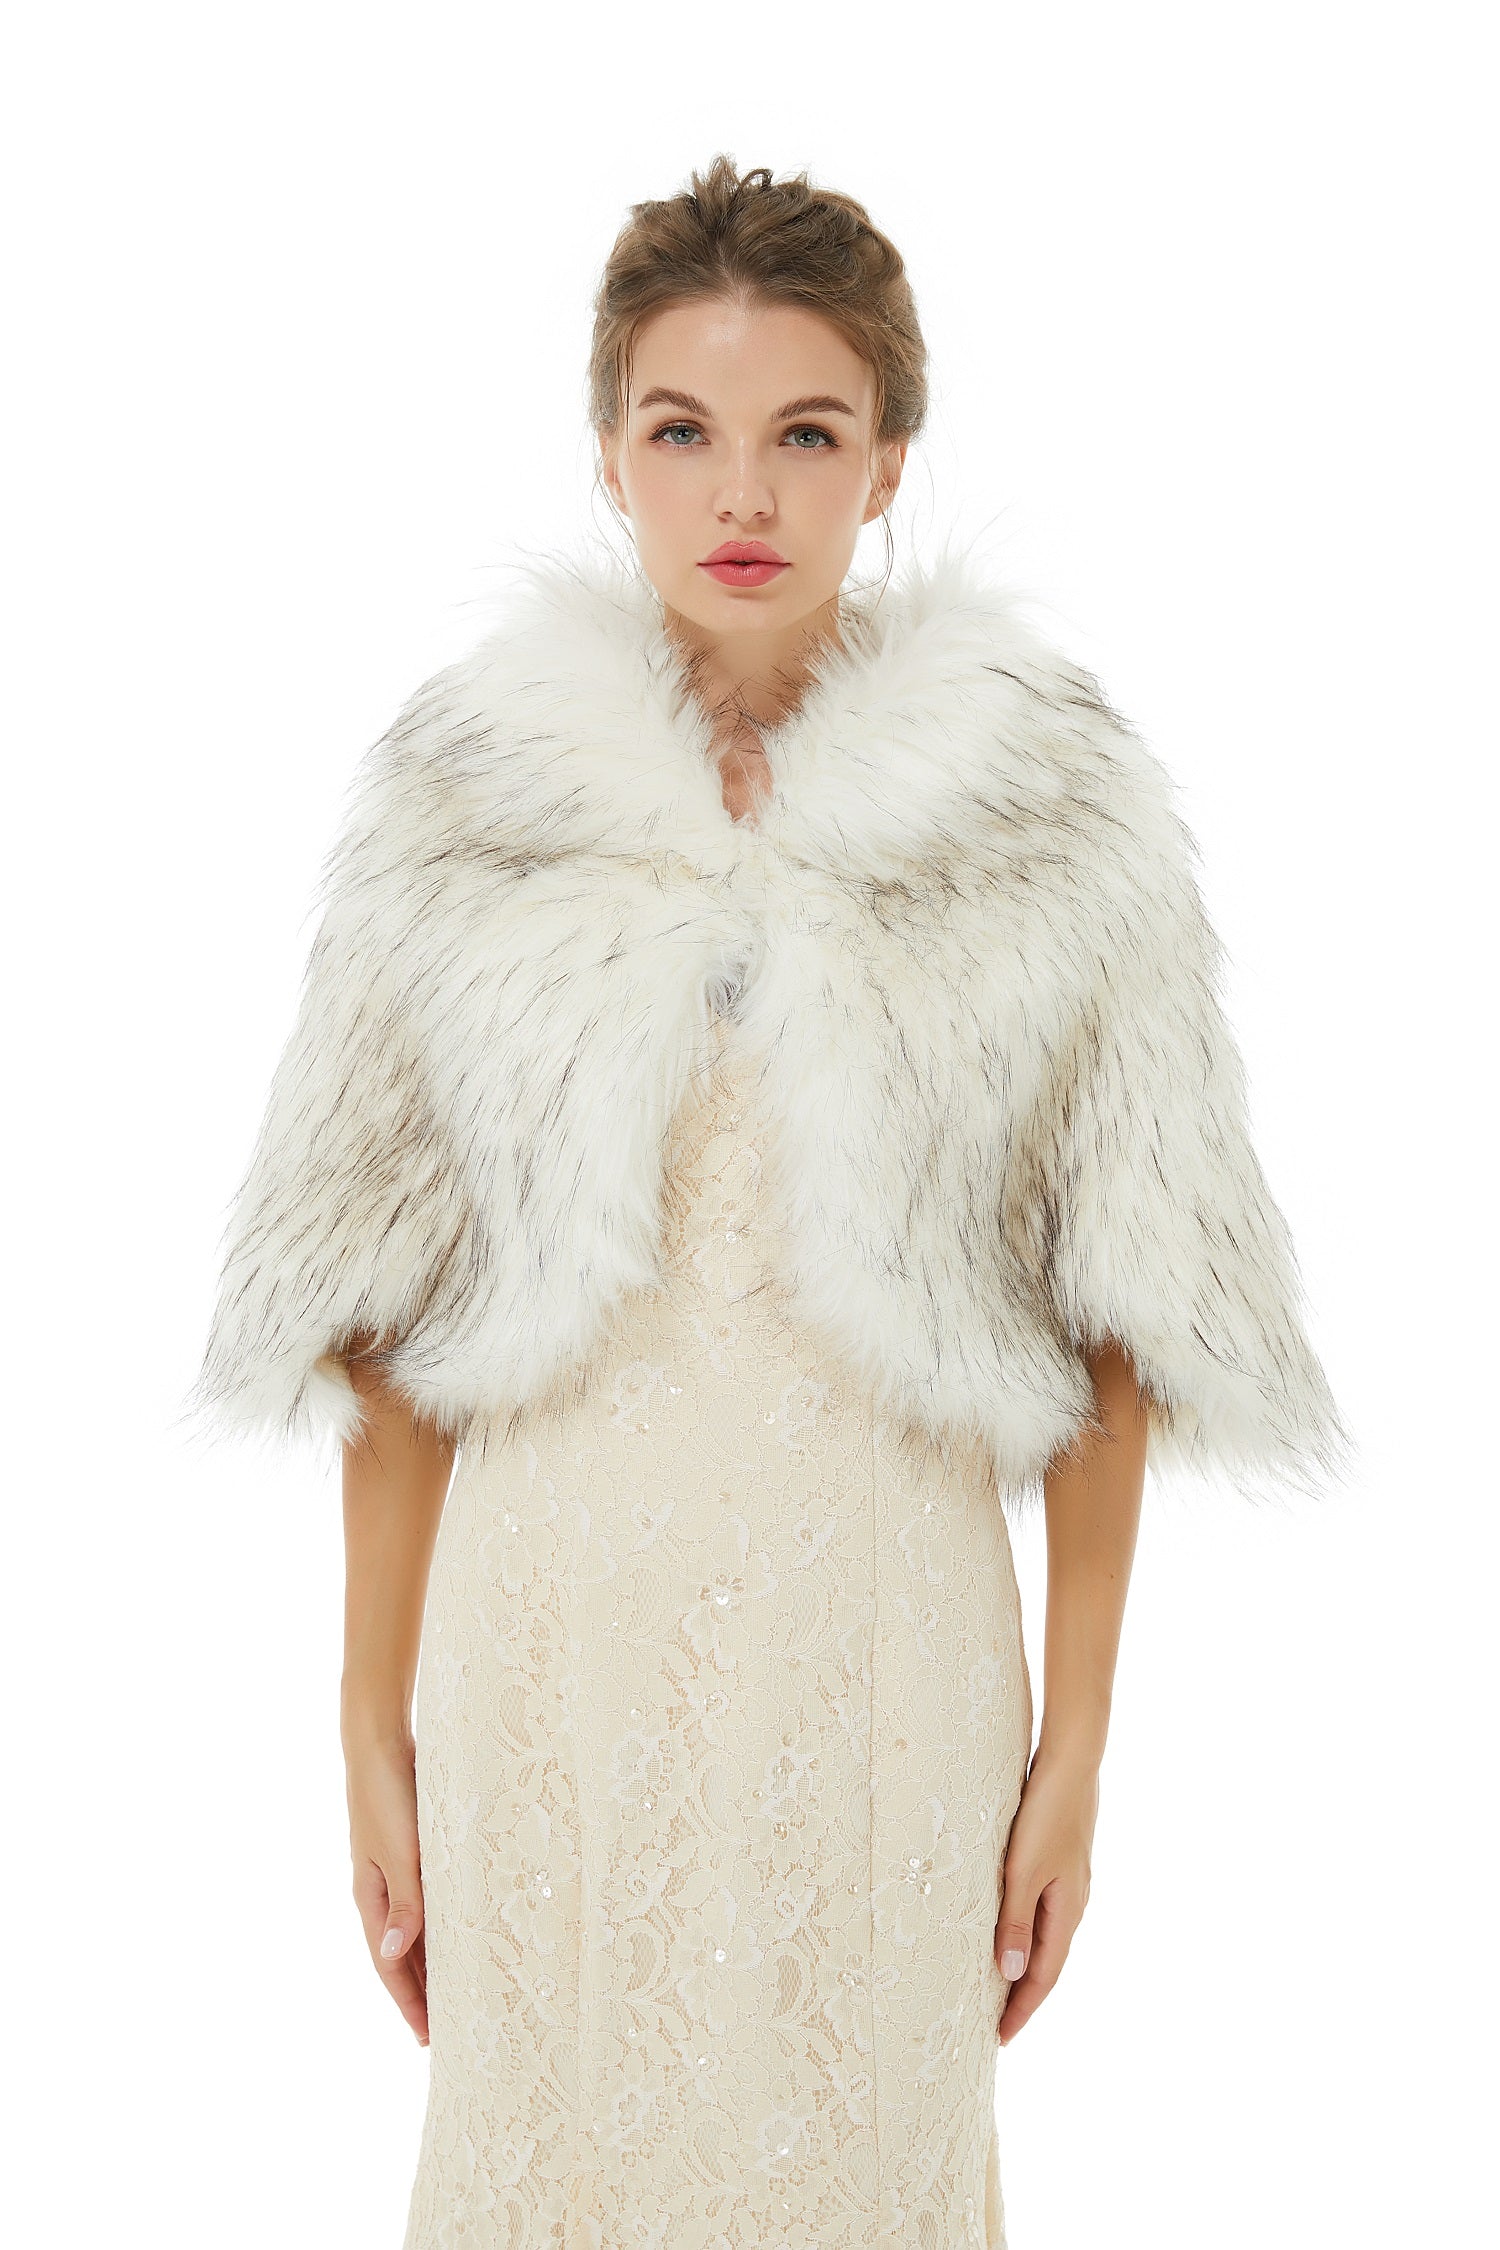 Stunning White Winter Faux Fur Wedding Wrap - lulusllly